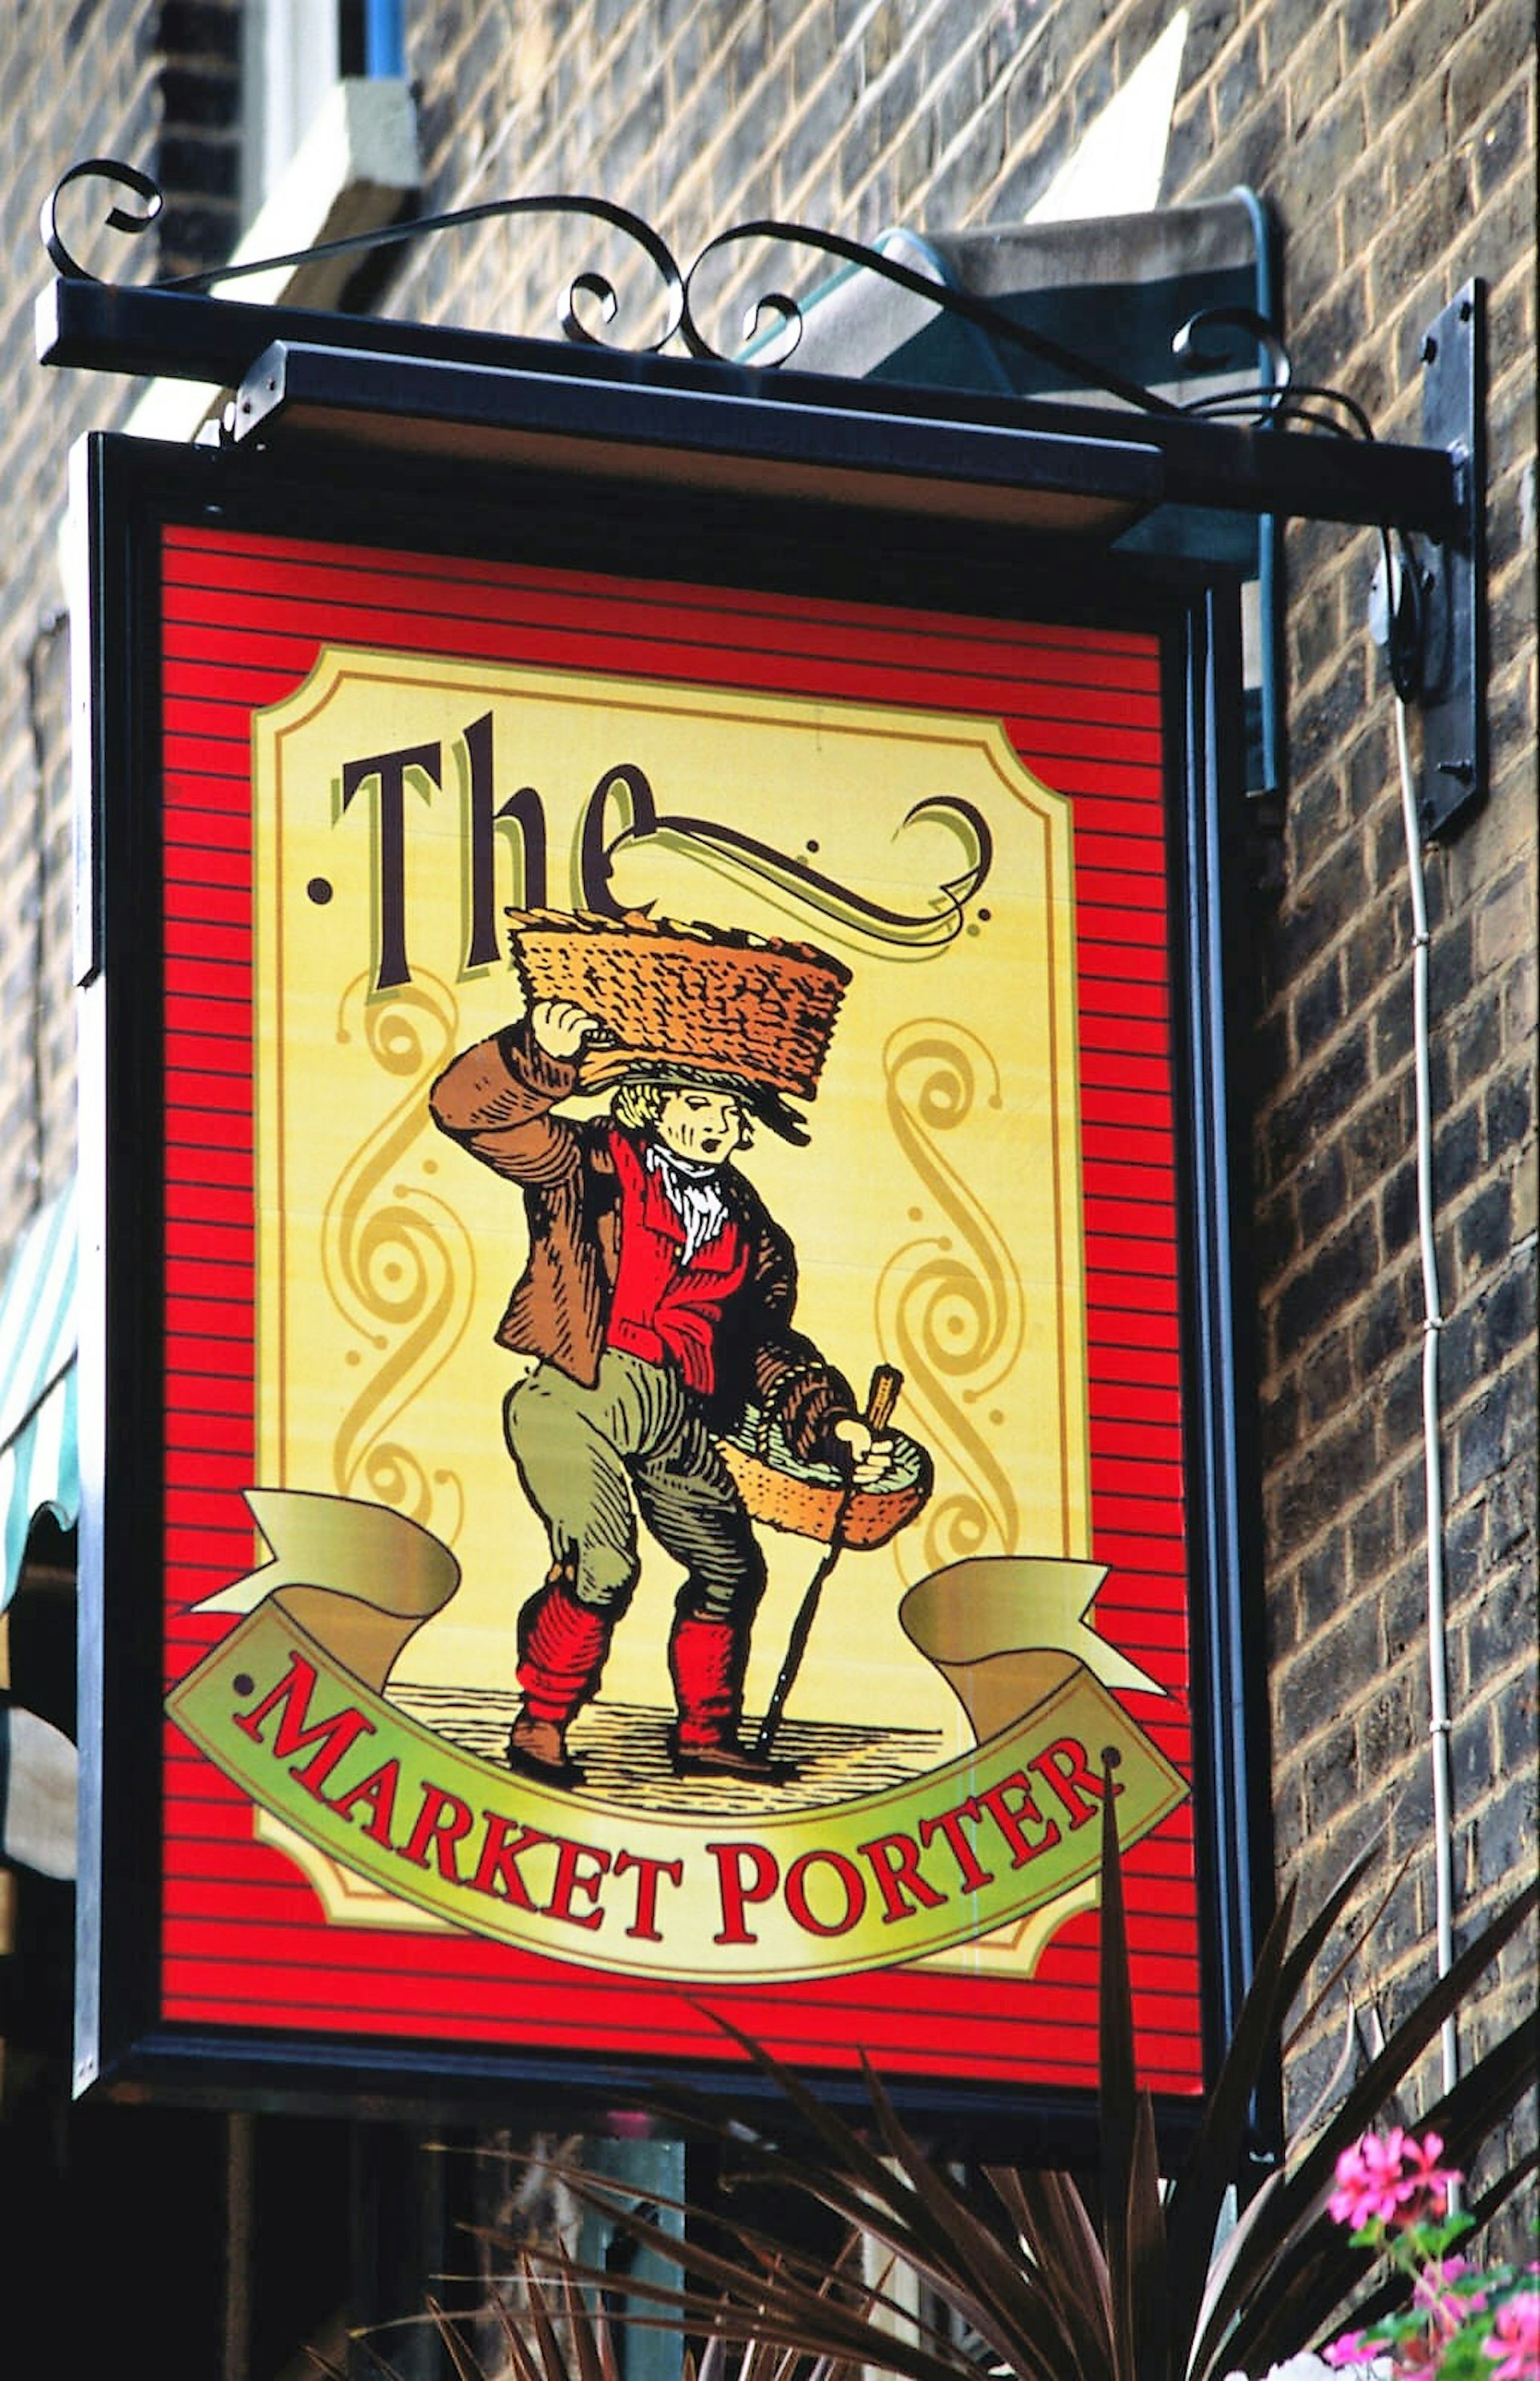 A pub sign for the Market Porter pub.